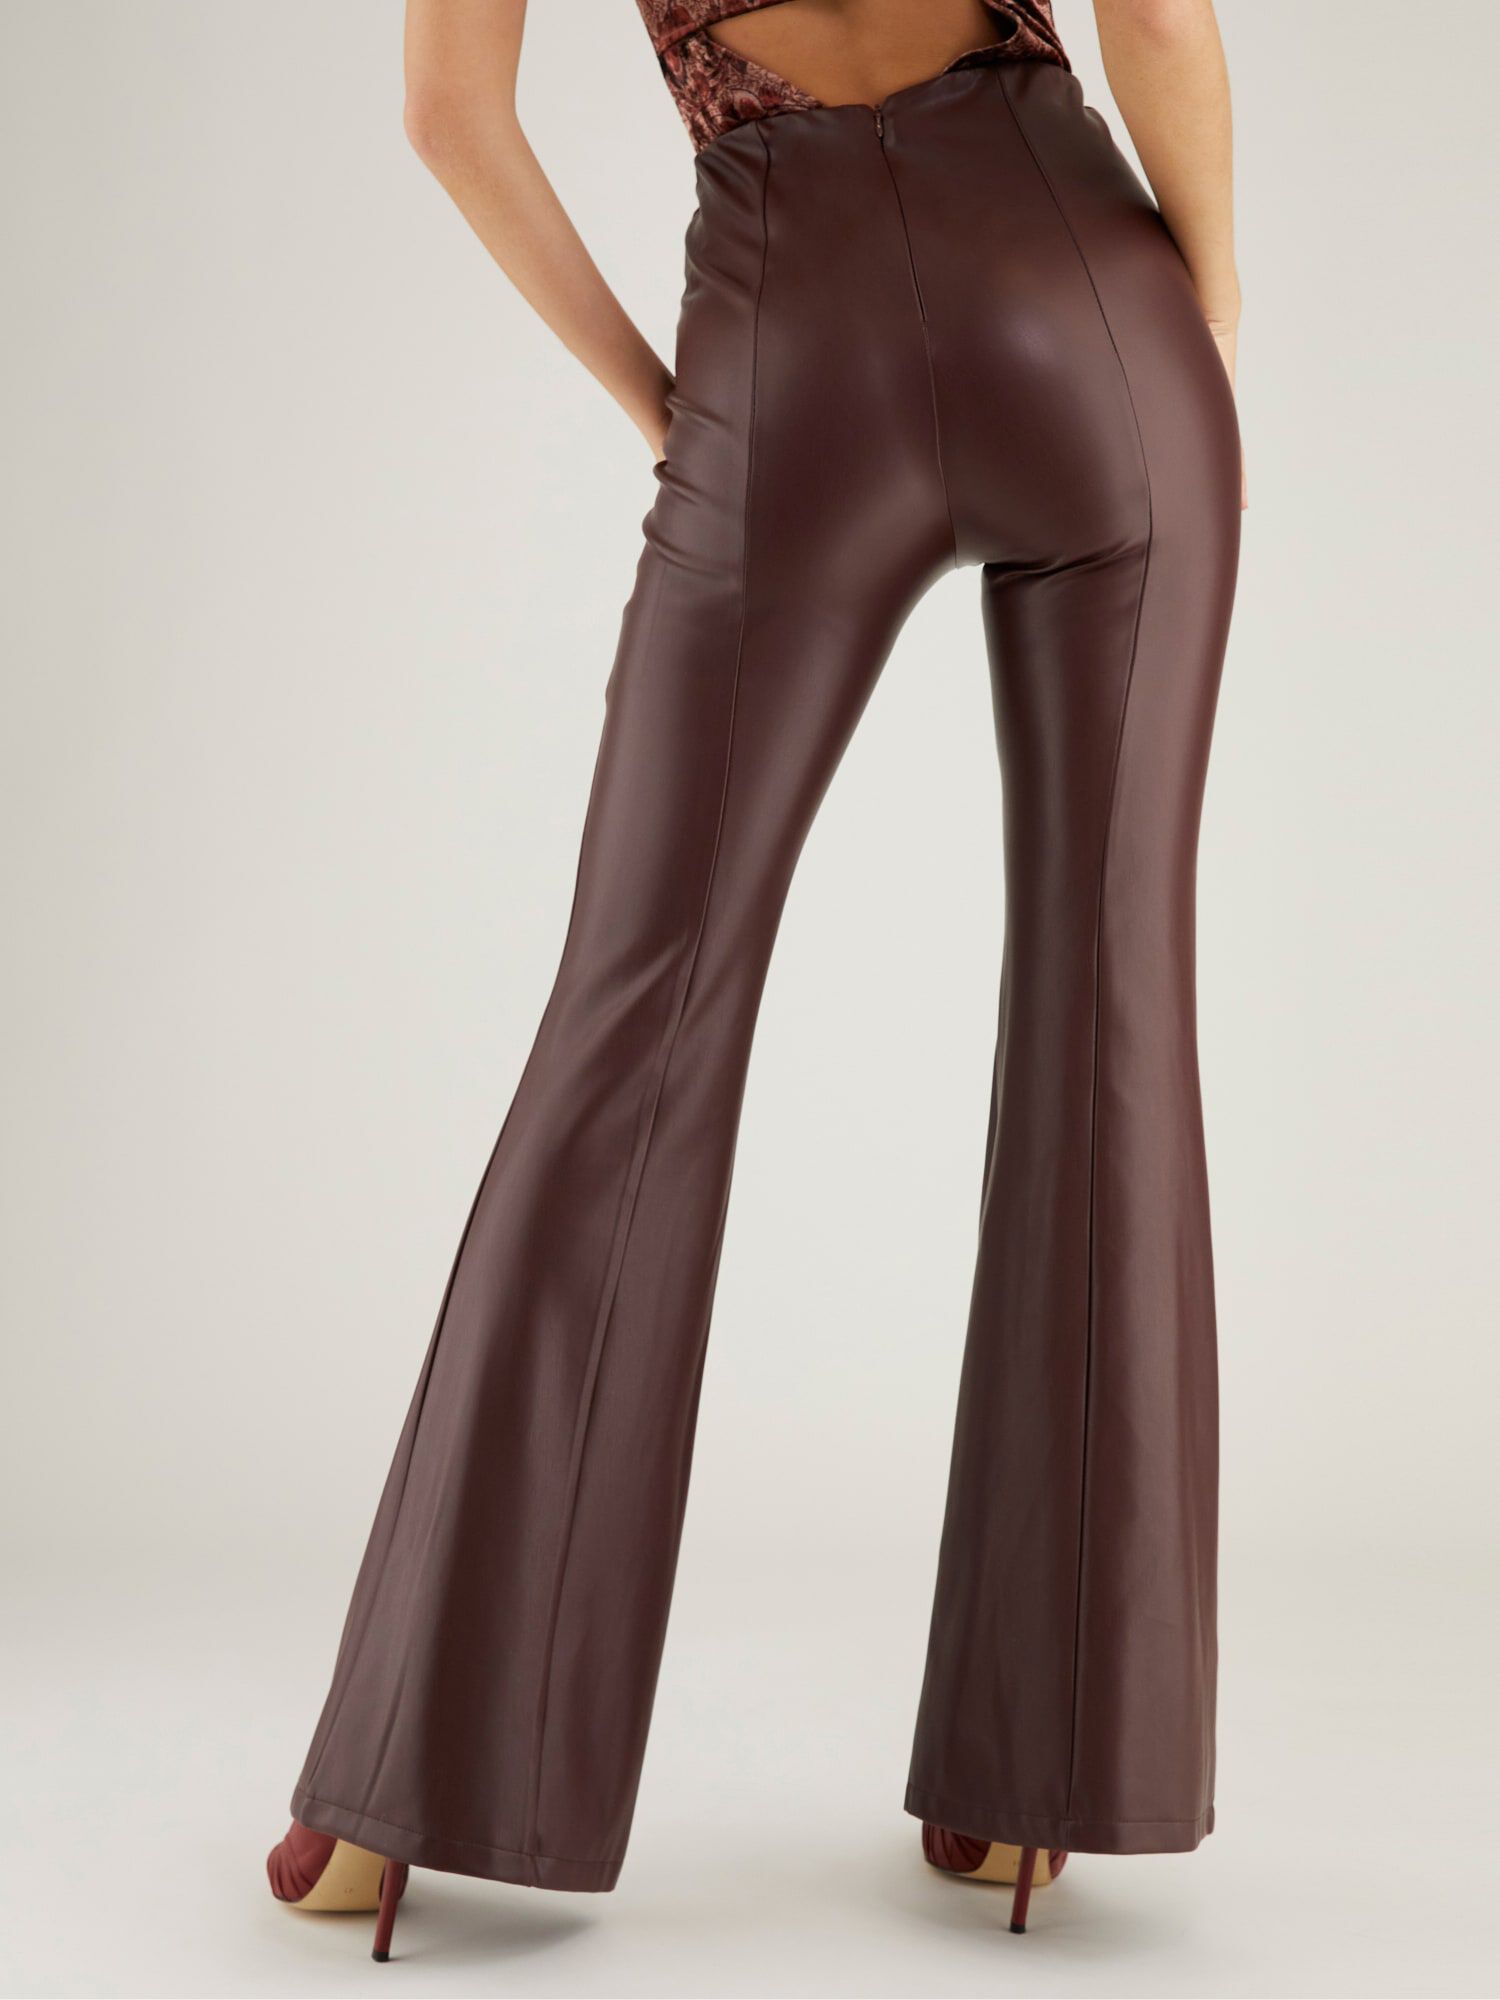 Shop GUESS Online Faux Leather Flare Pant